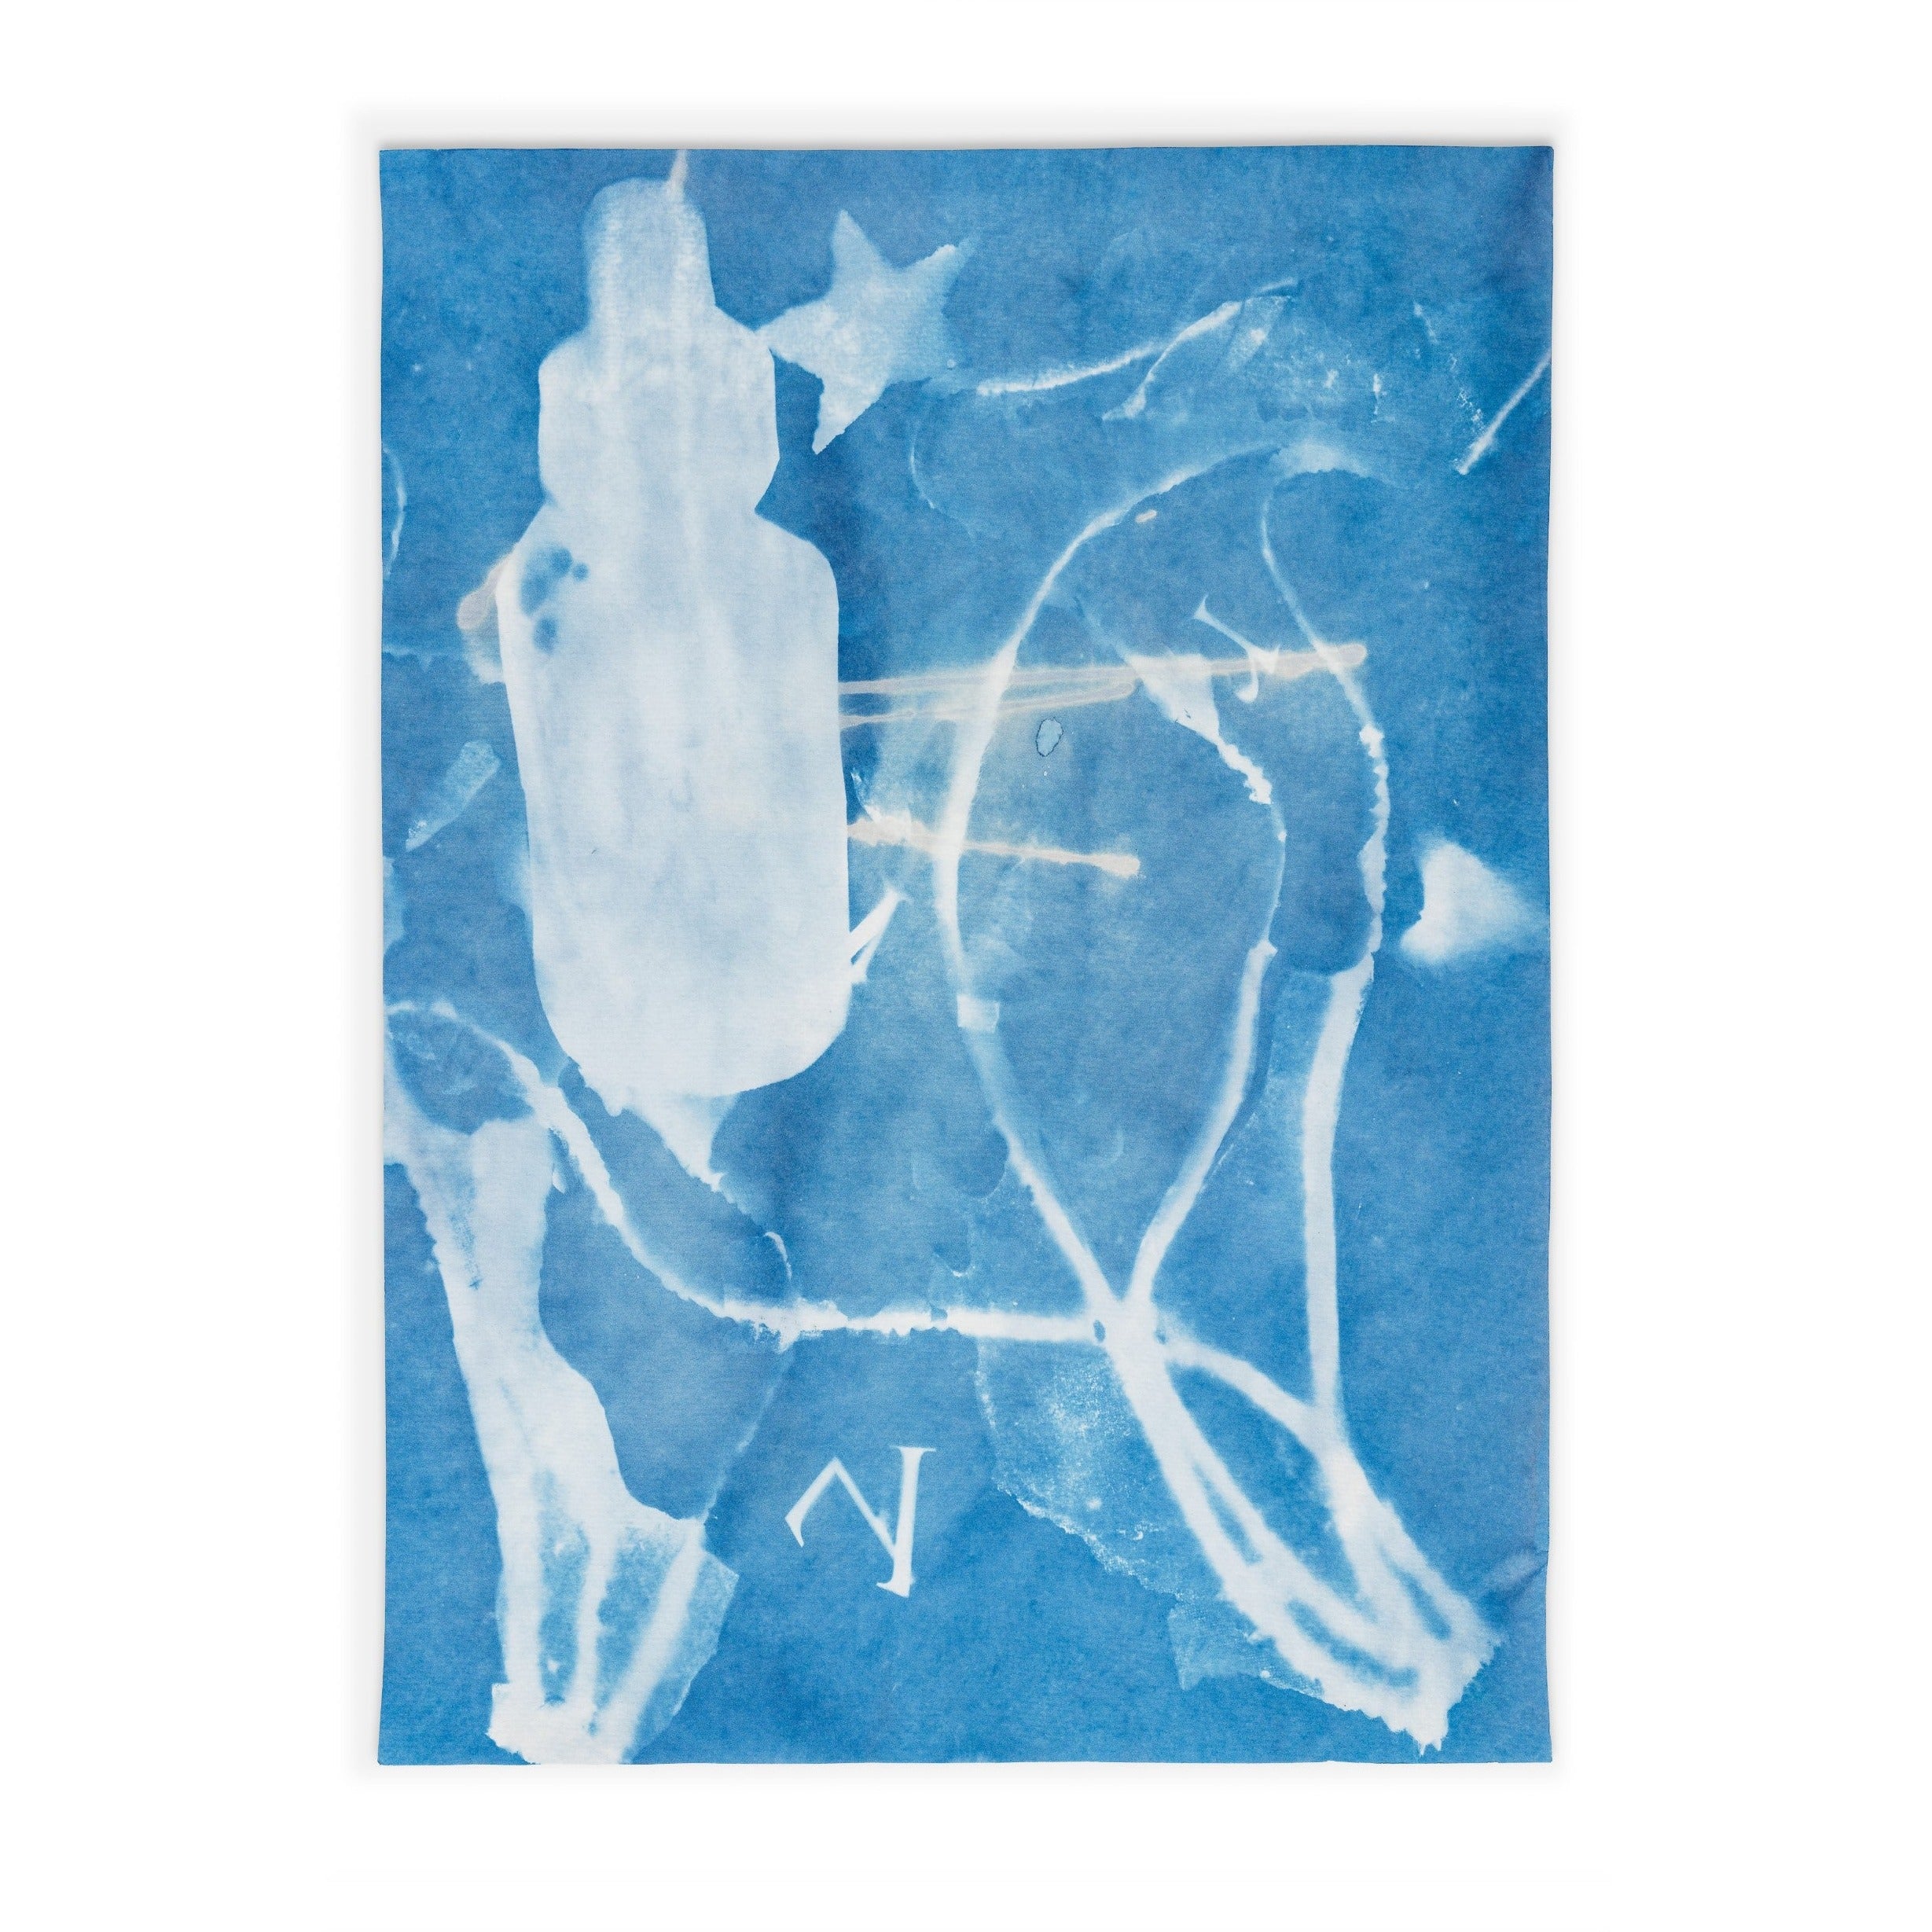 Birth of a Horologist (Cyanotype Print Series)